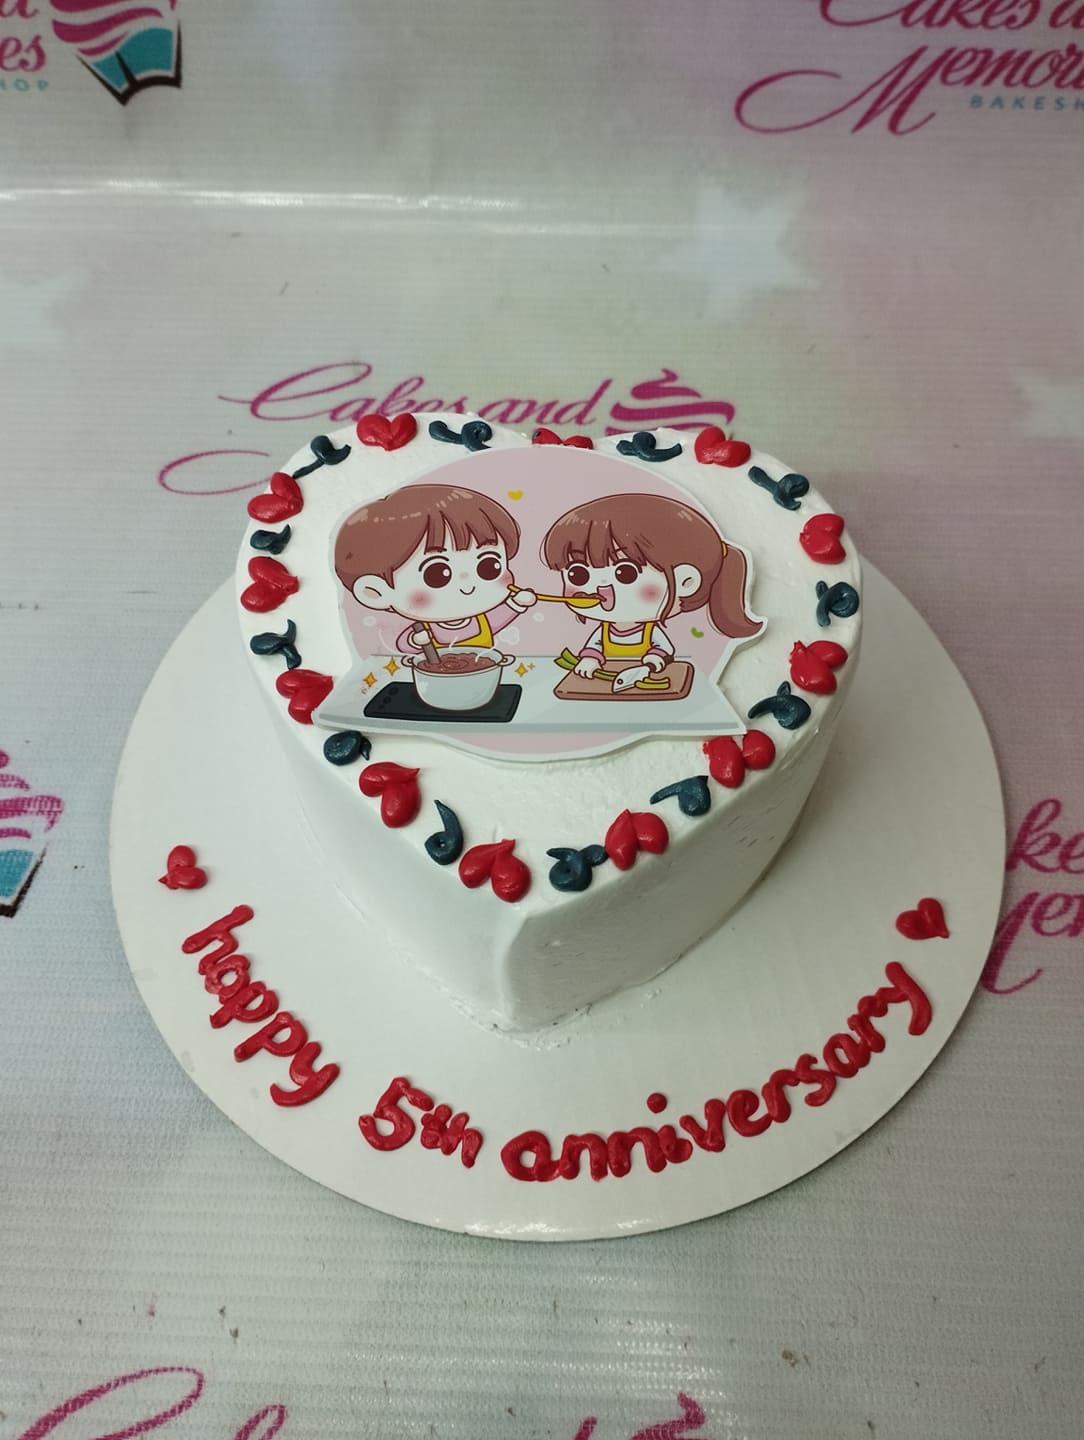 Order Love Anniversary Cake Design For Her/Him